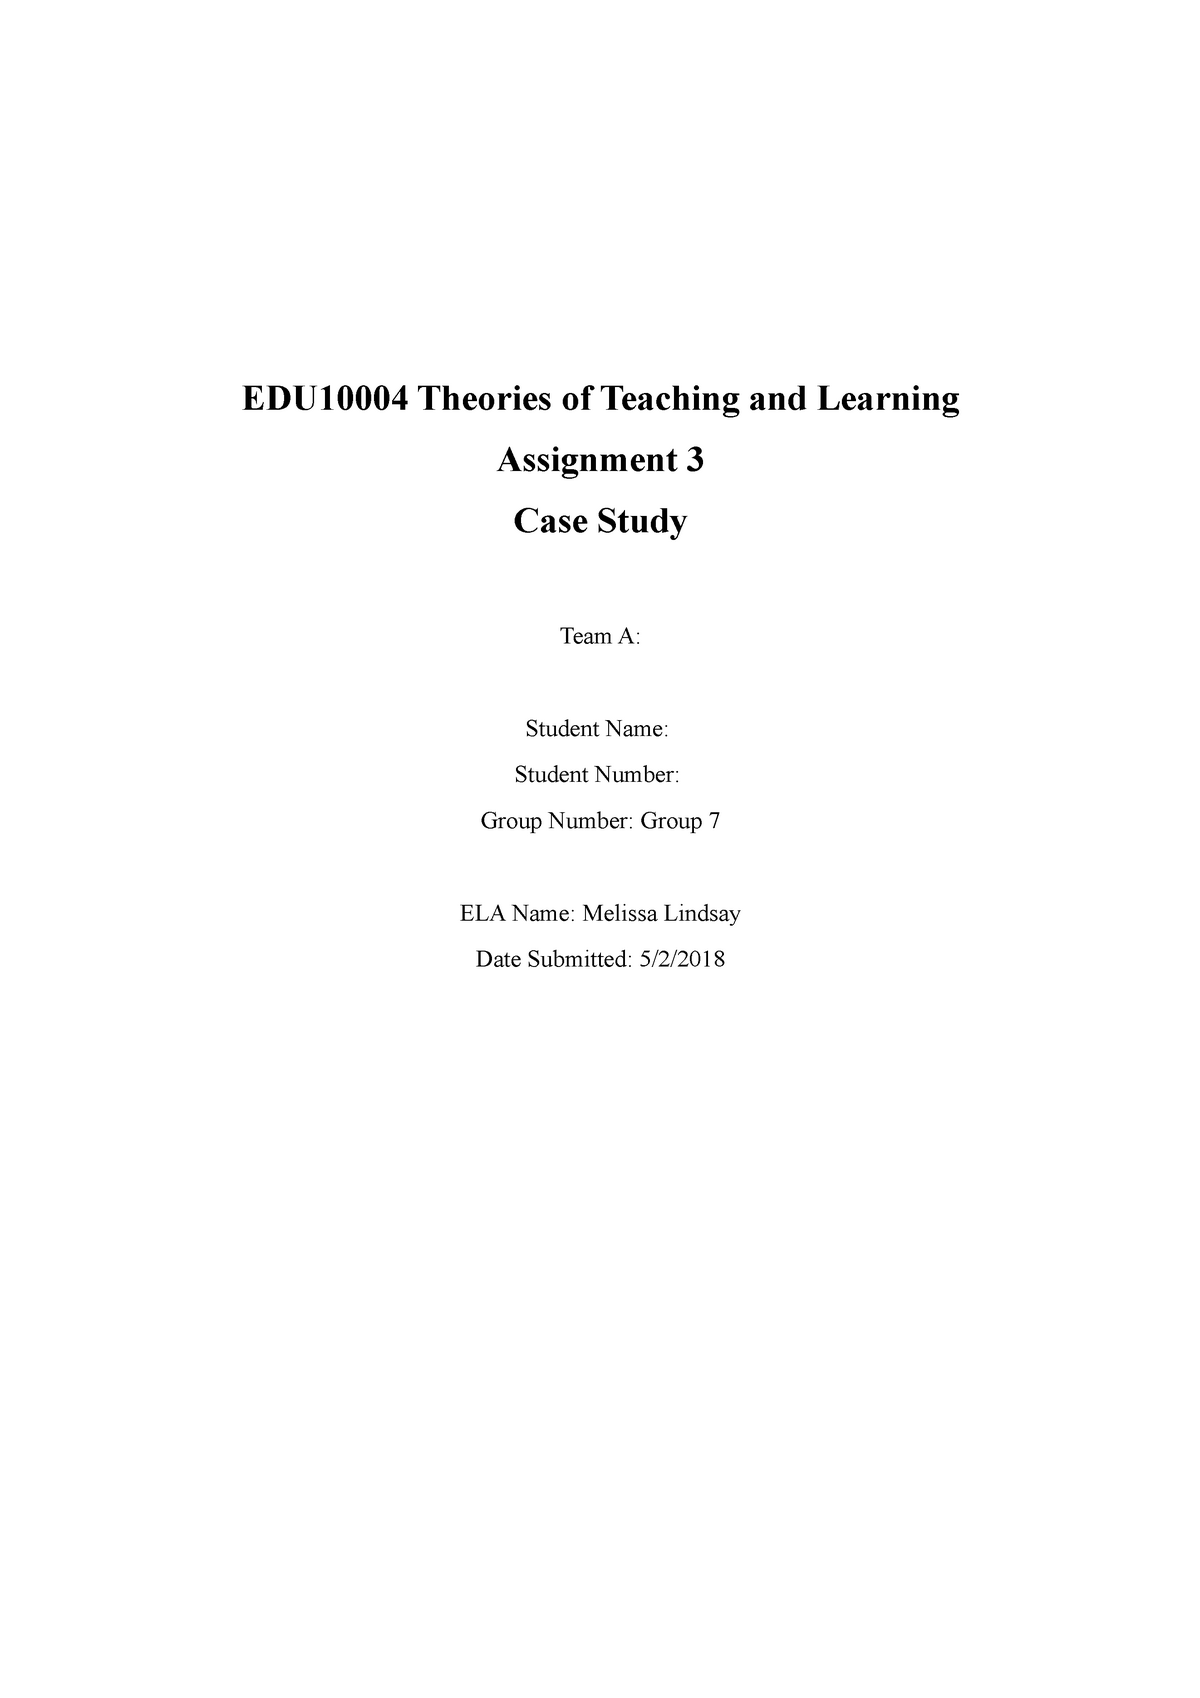 edu10004 assignment 3 case study